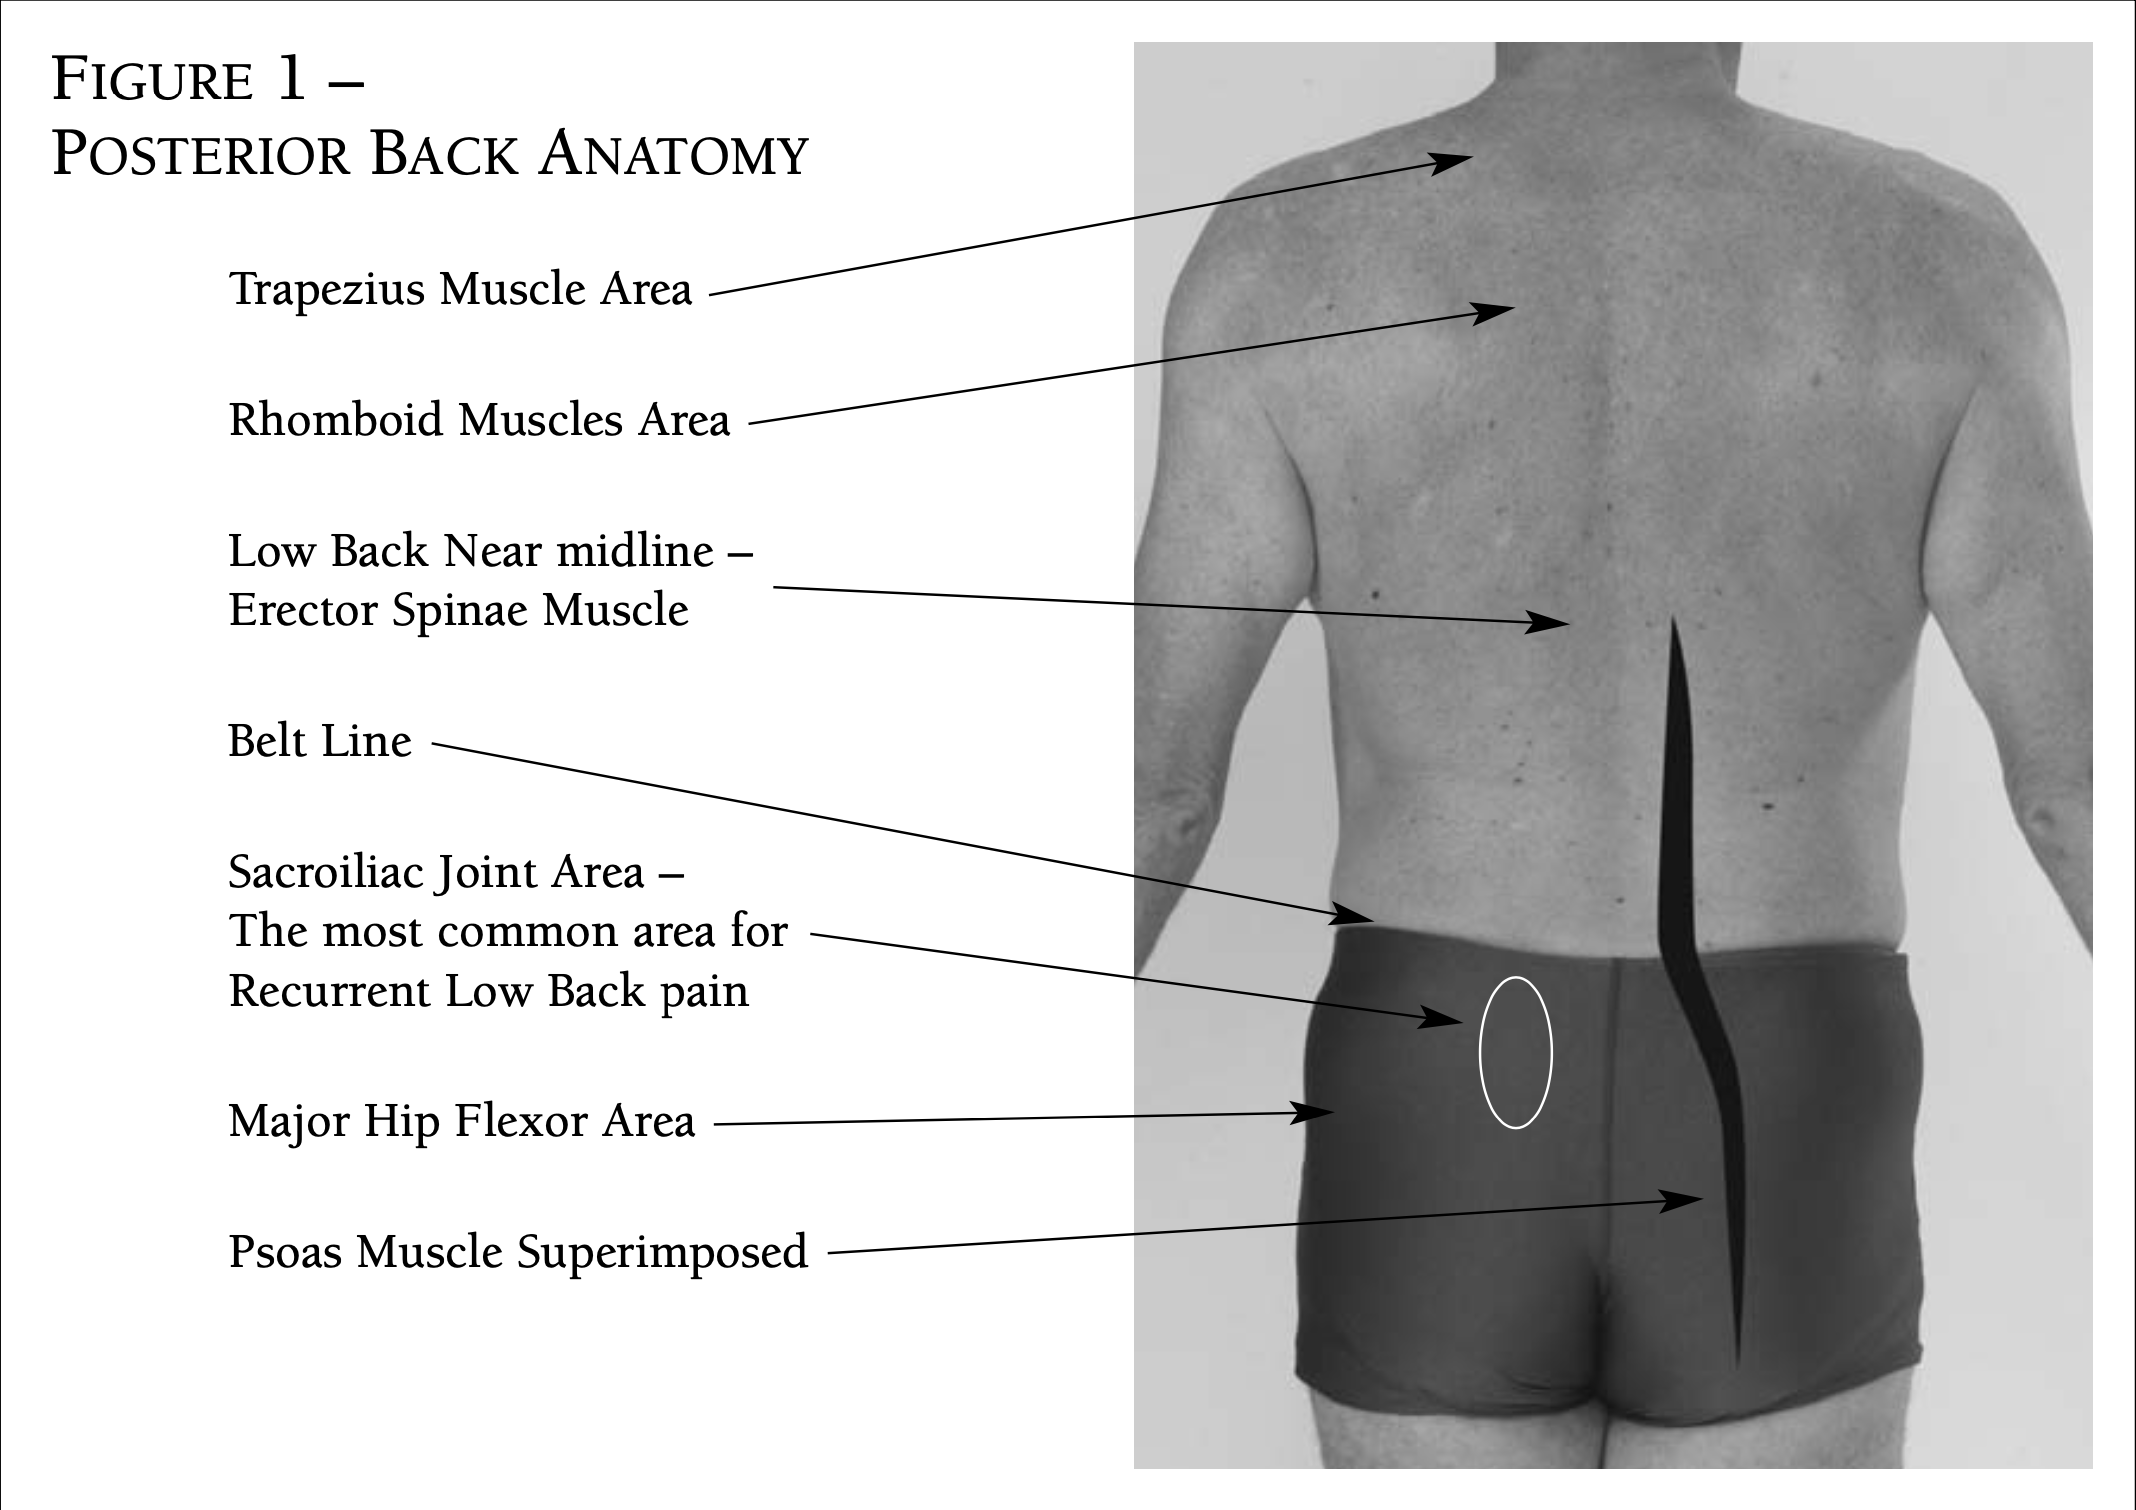 Back muscle image